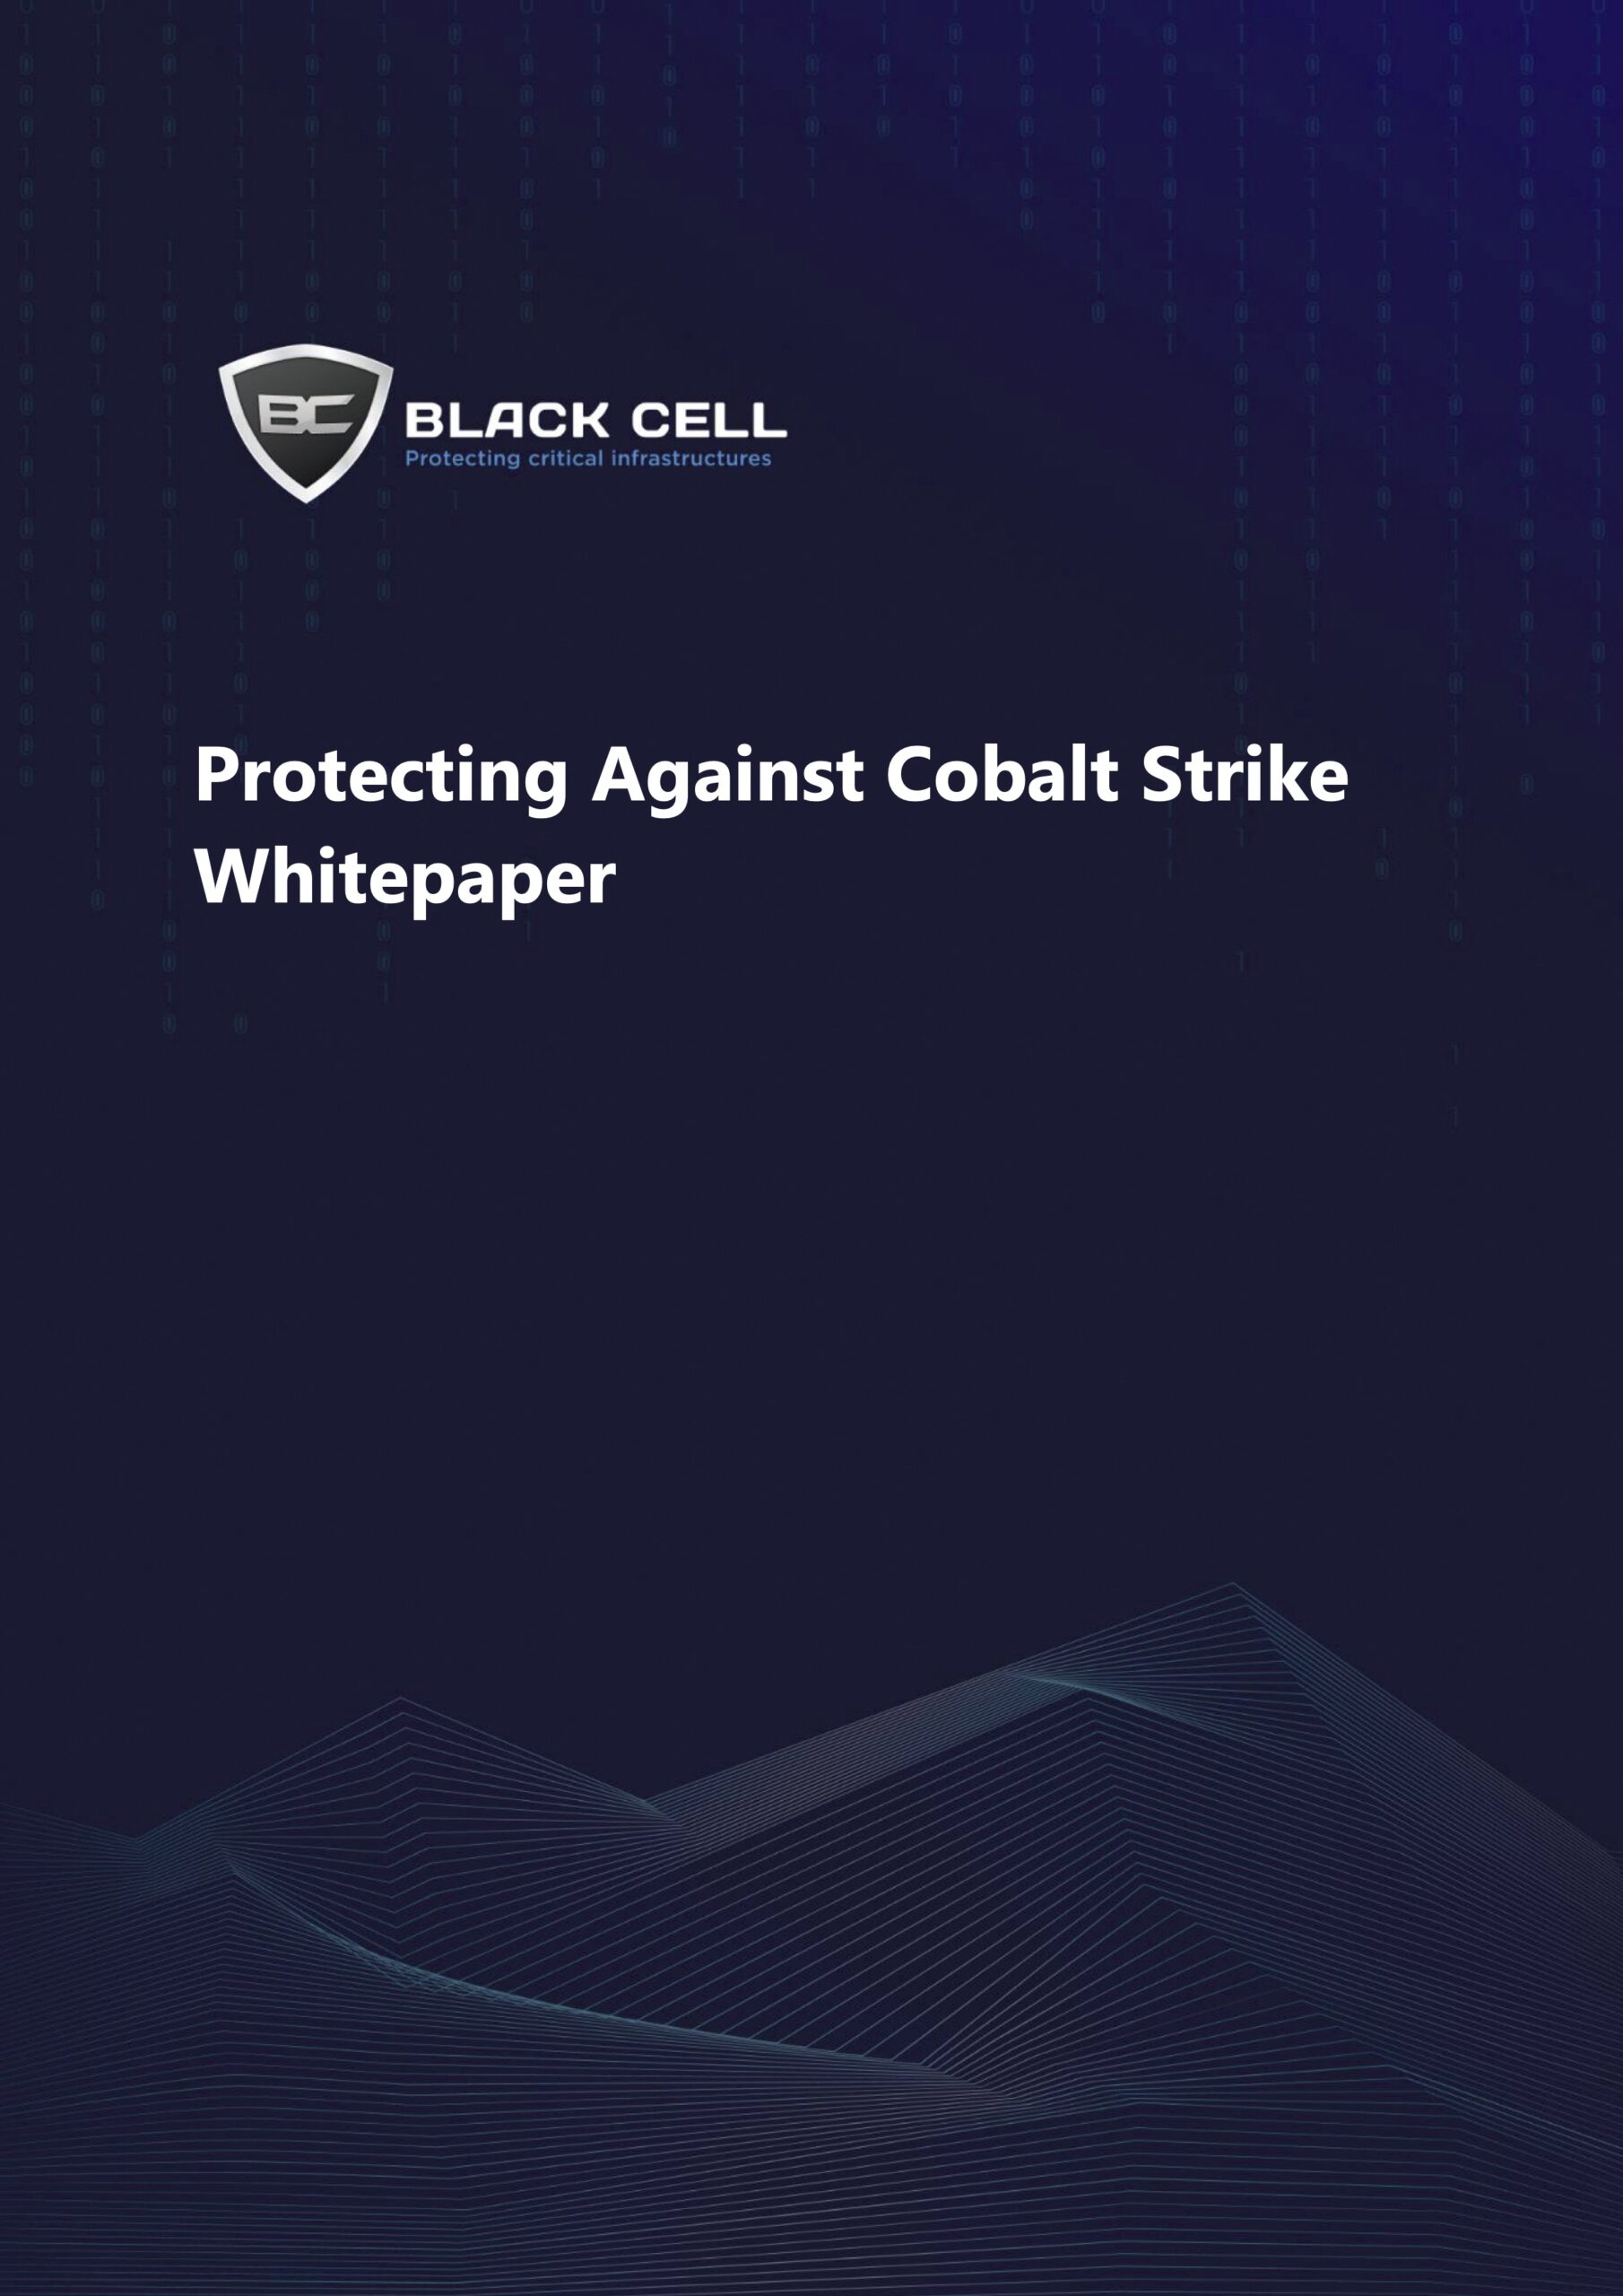 Cobalt Strike